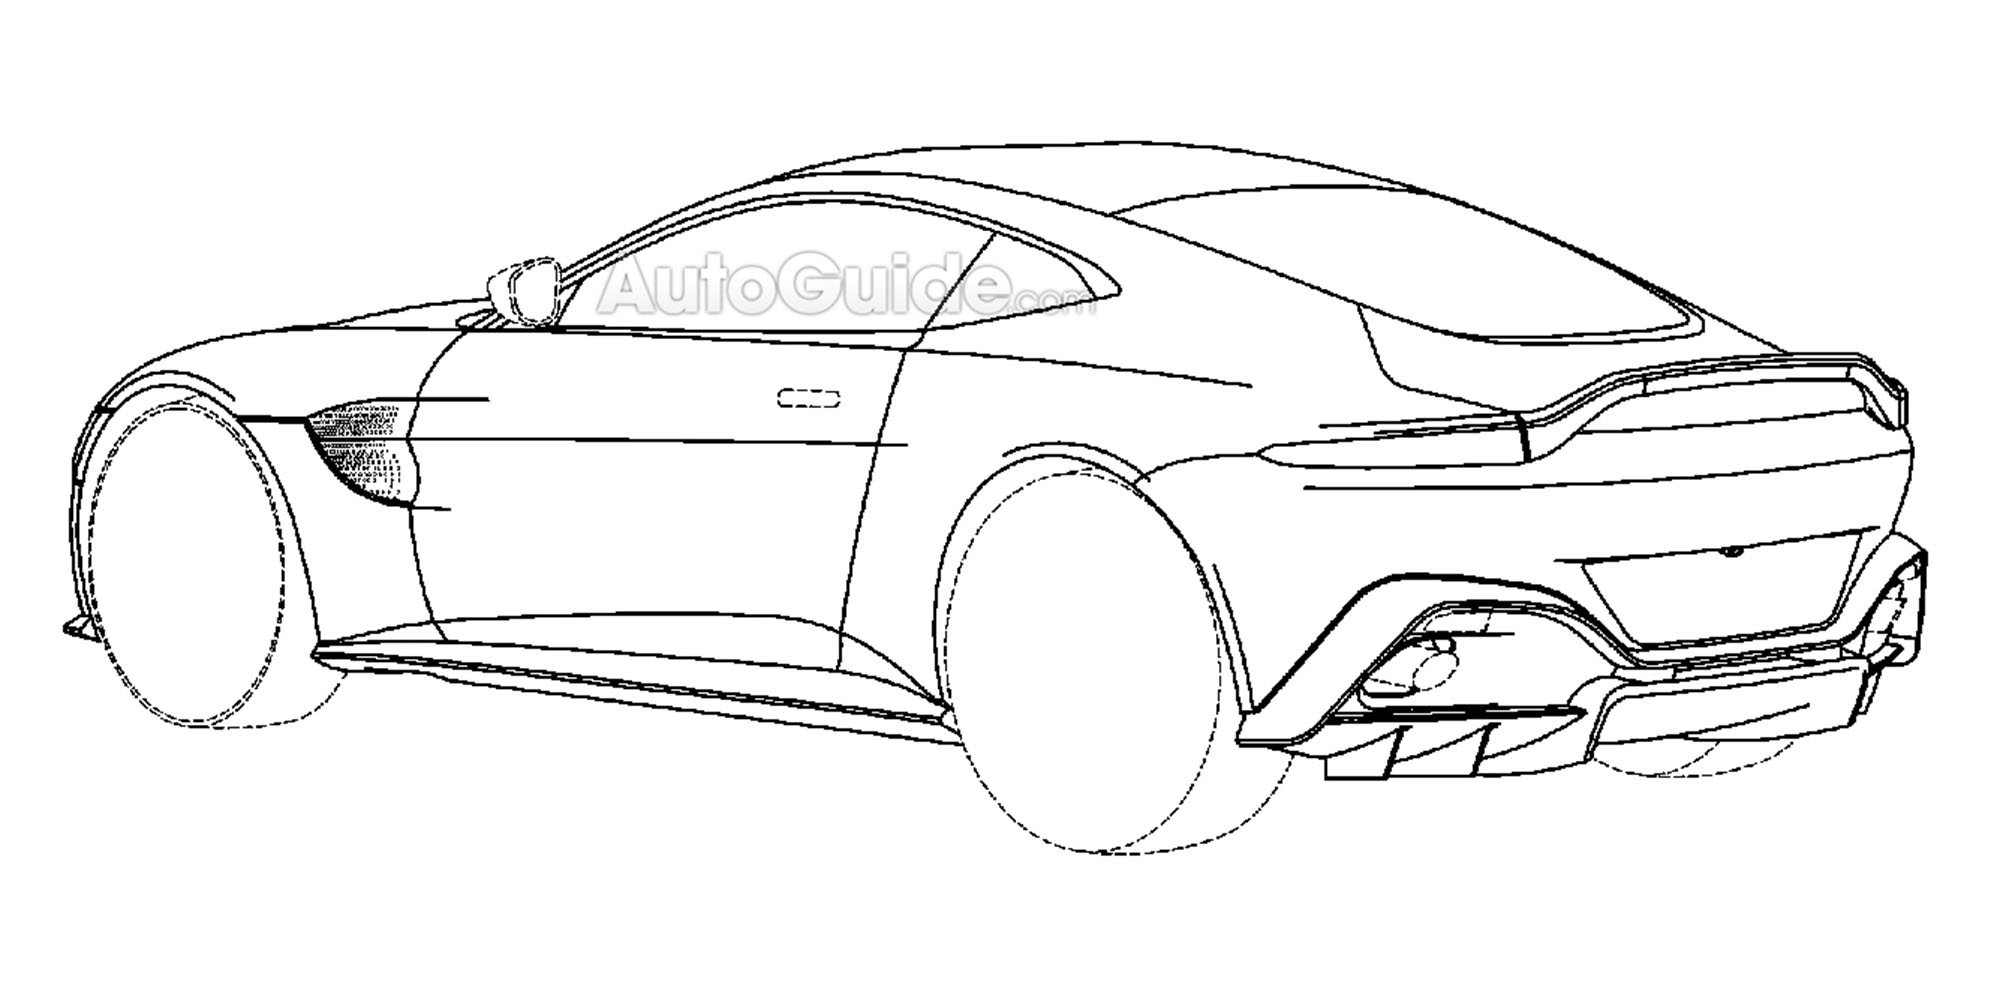 2018 Aston Martin Vantage Patent Diagrams Discovered